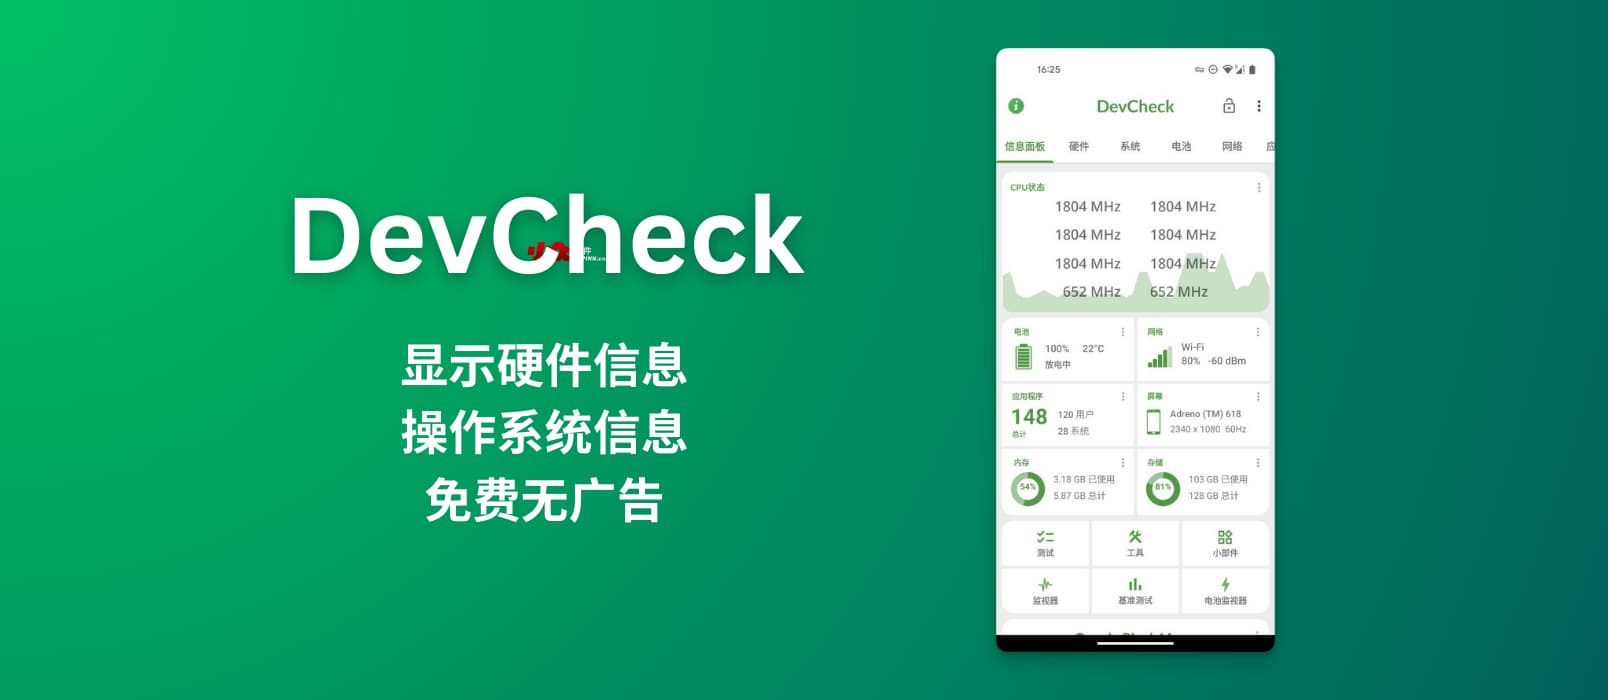 DevCheck - 实时显示 Android 设备硬件、操作系统信息，免费无广告